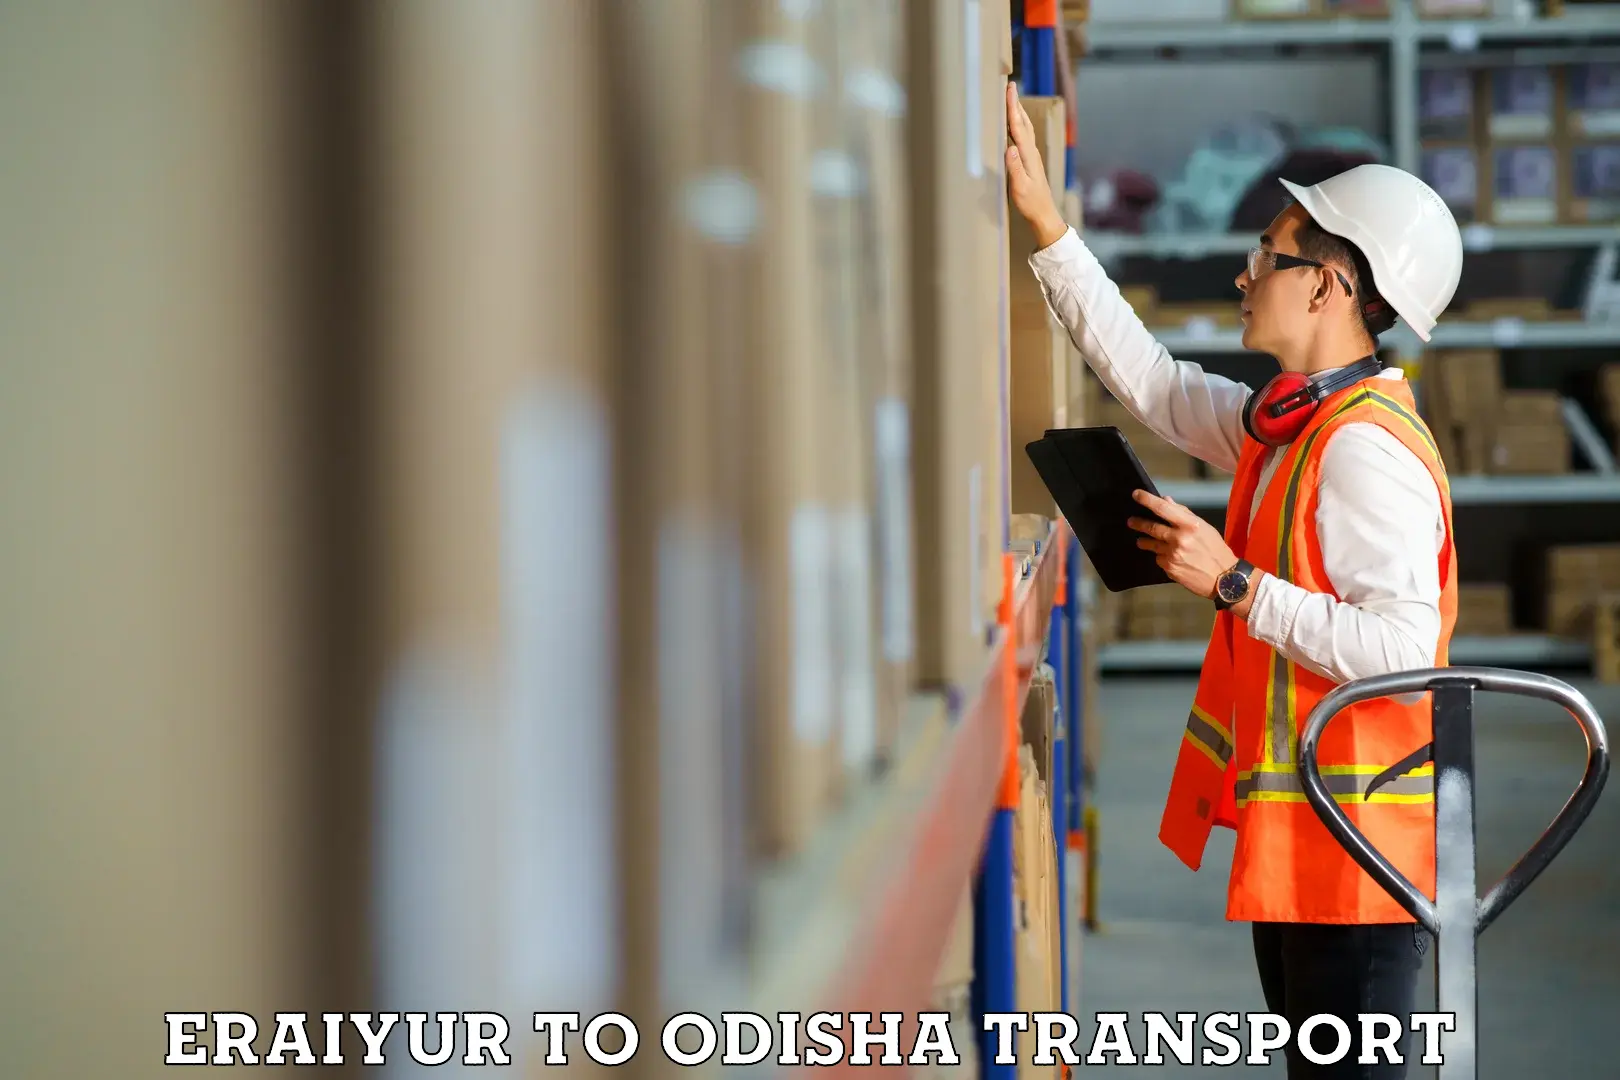 Commercial transport service Eraiyur to Odisha